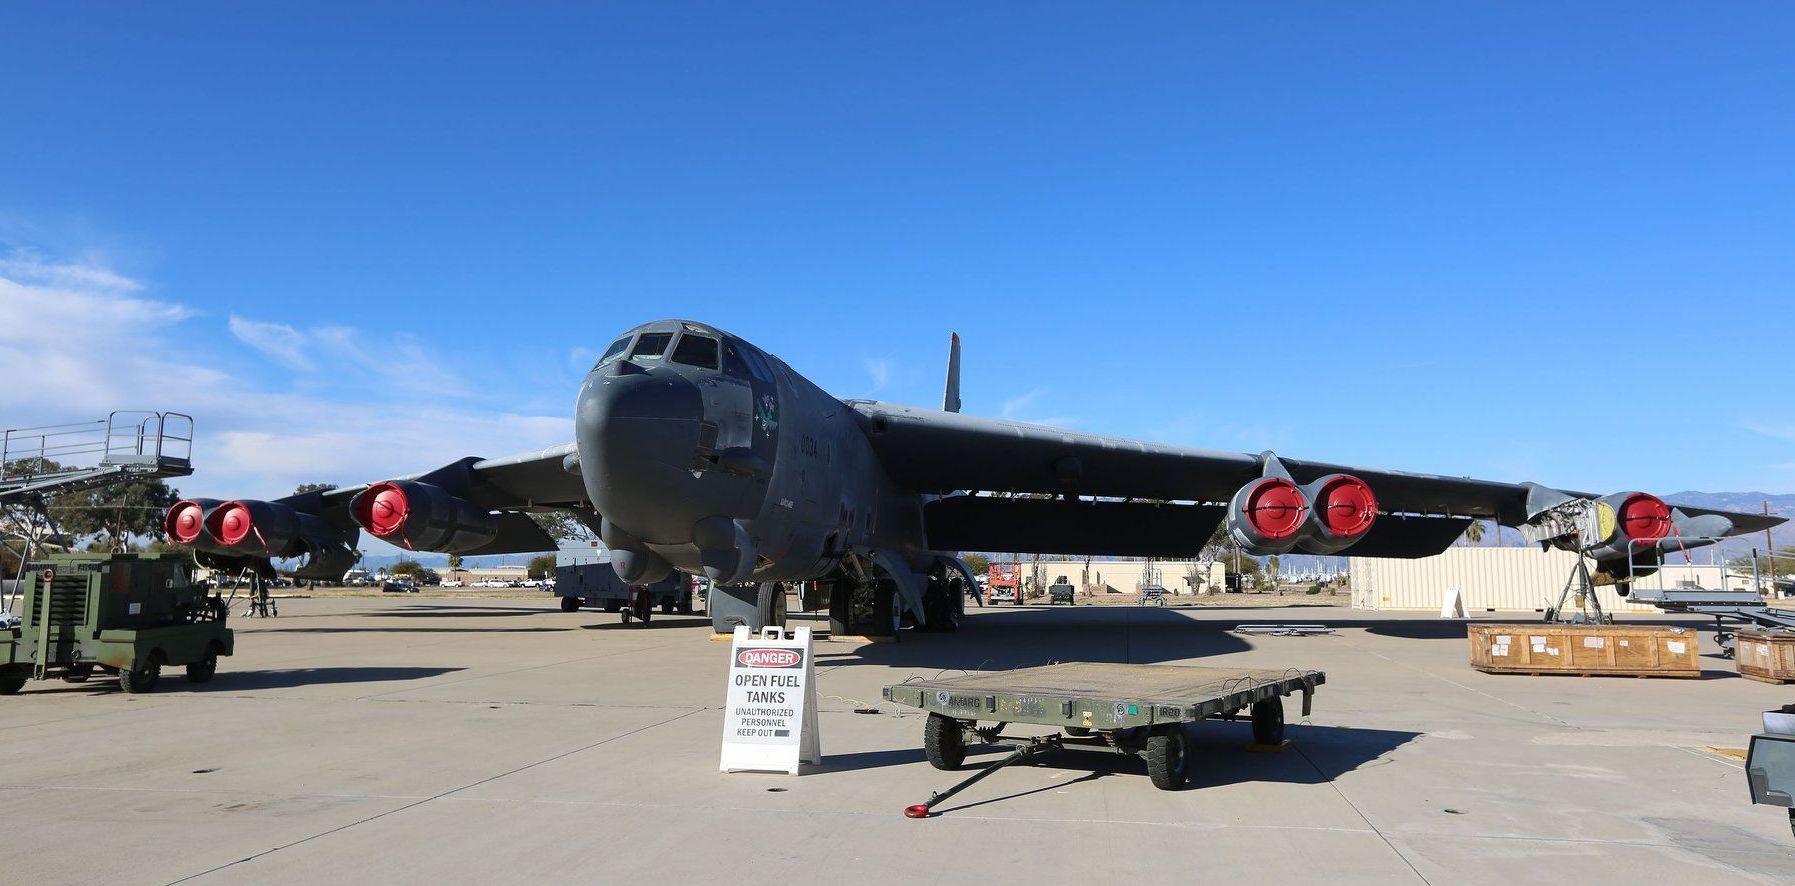 World's Largest Military Aircraft Boneyard: world record in Tucson, Arizona